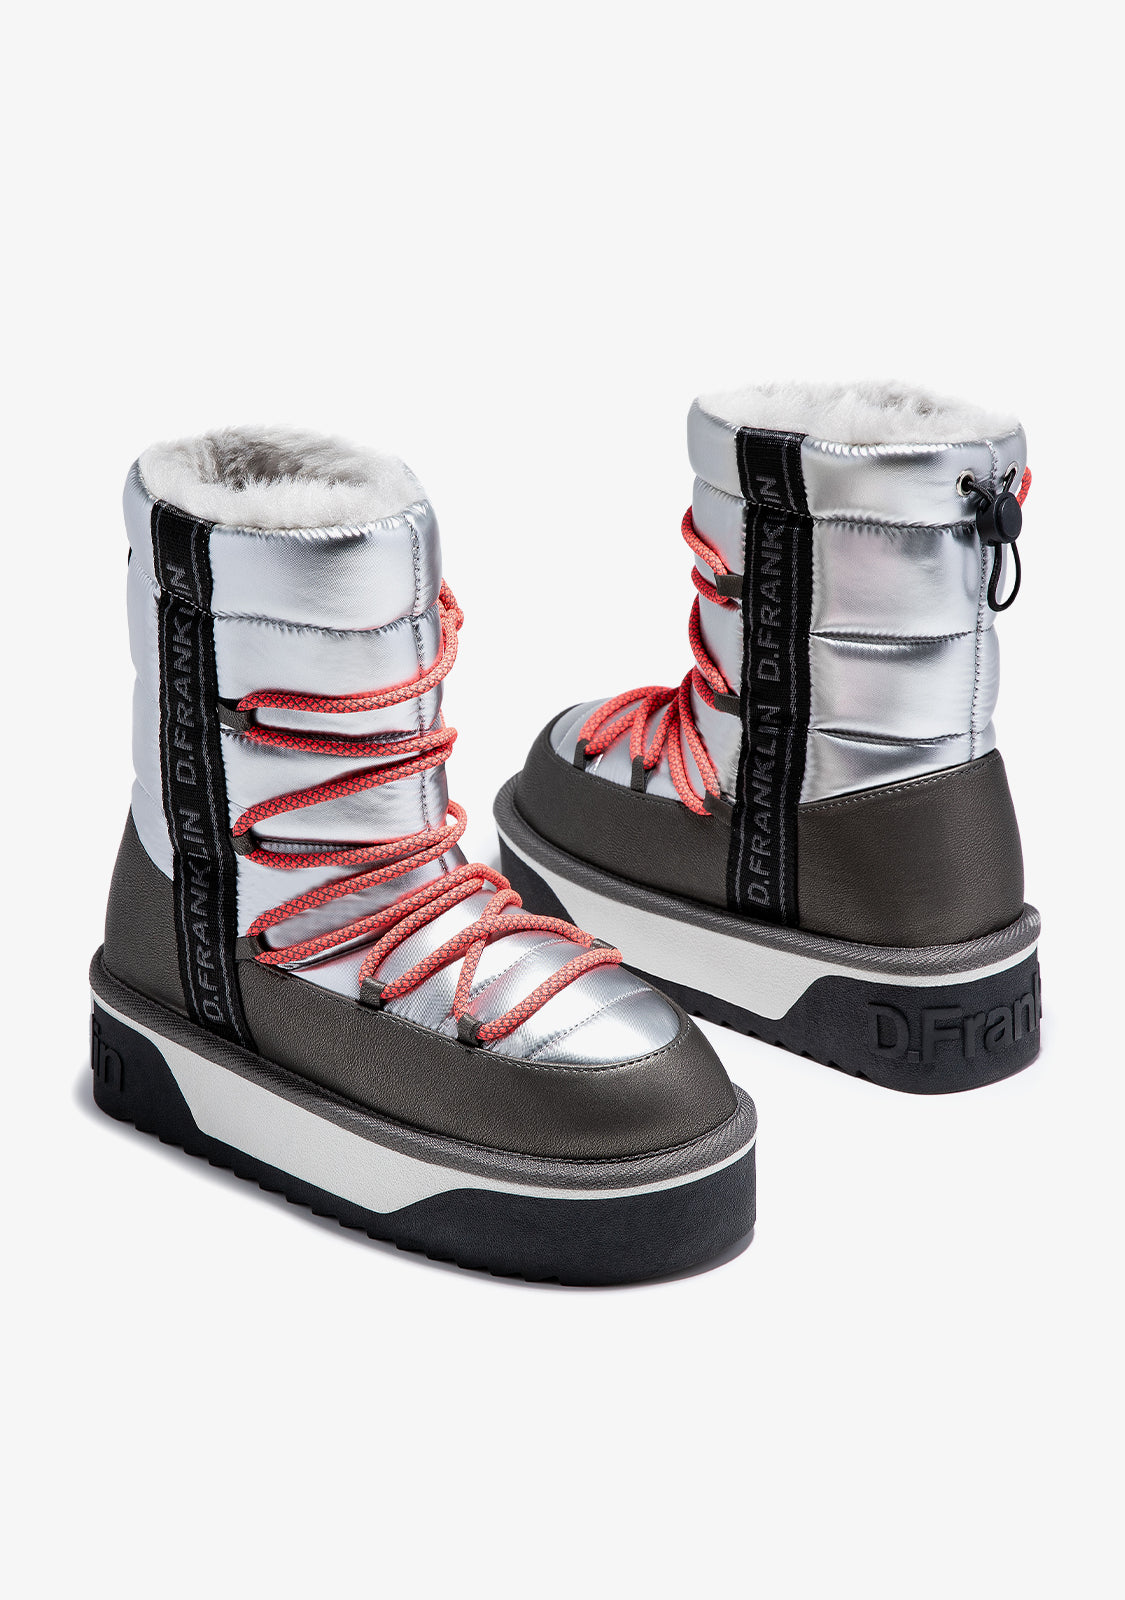 Women's Snow Boots With a Thick Sole Vegan D.Franklin DFSH371006 Beige